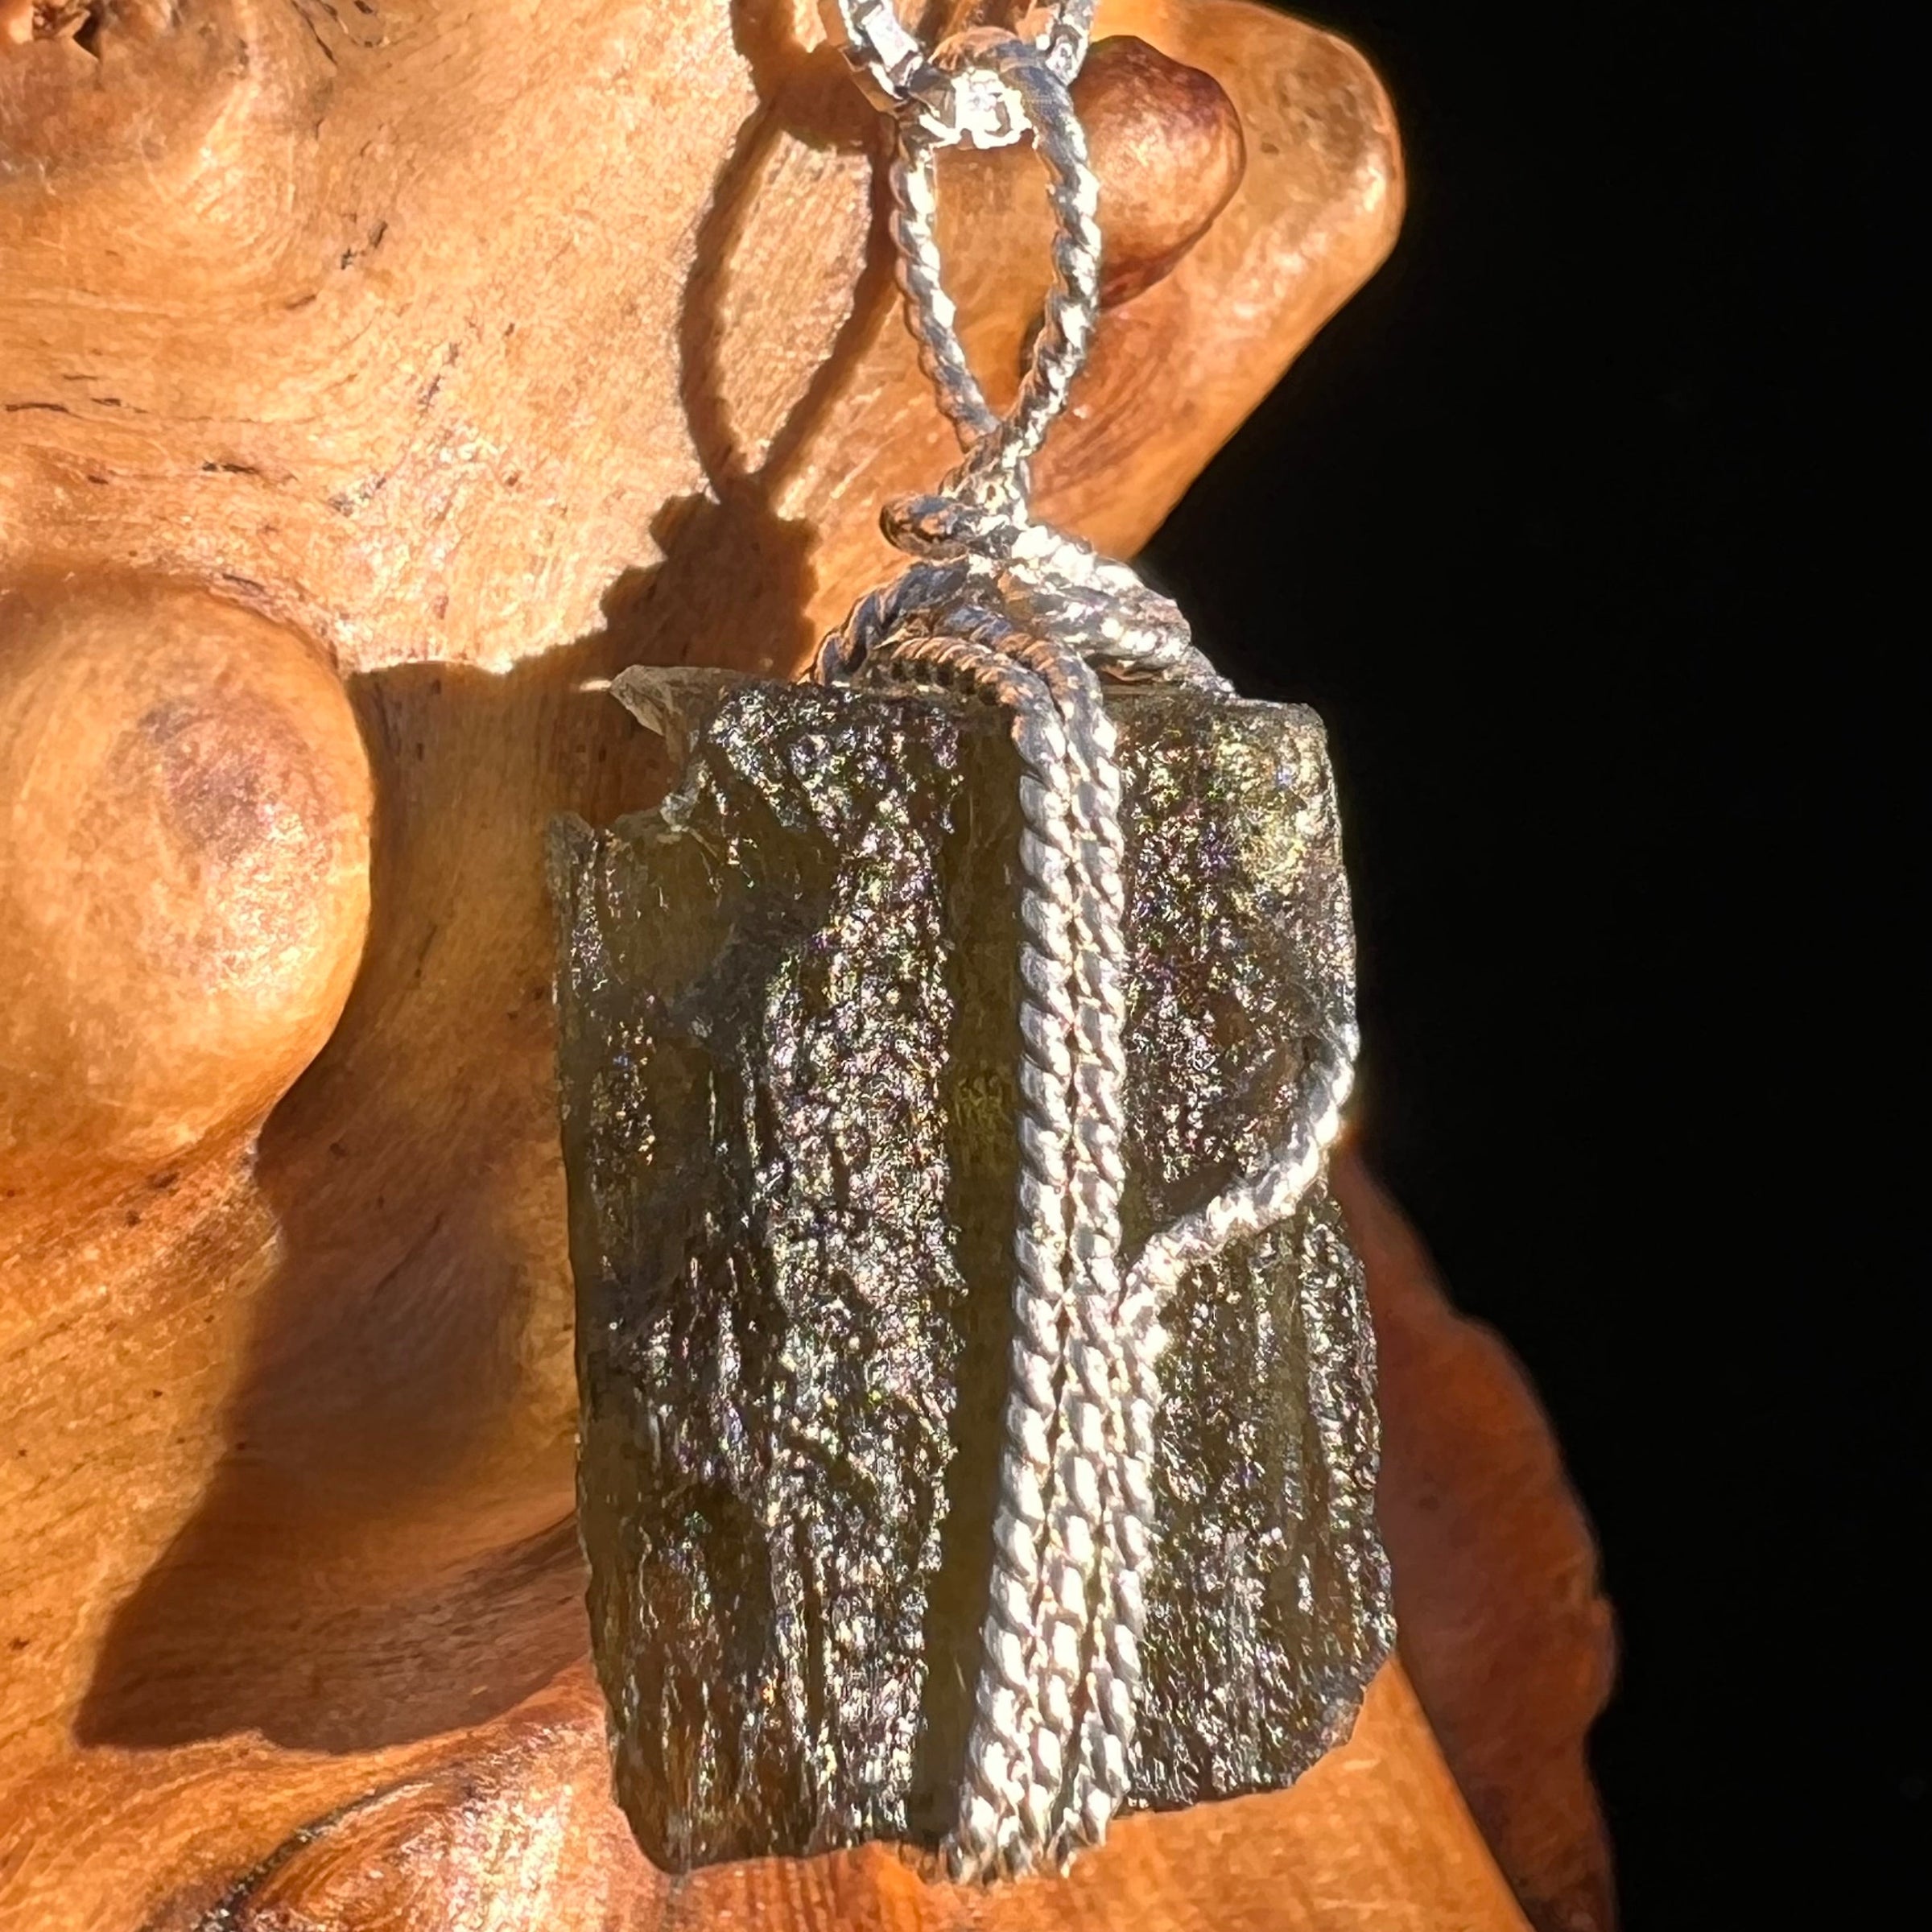 Moldavite Wire Wrapped Pendant Sterling Silver #5804-Moldavite Life